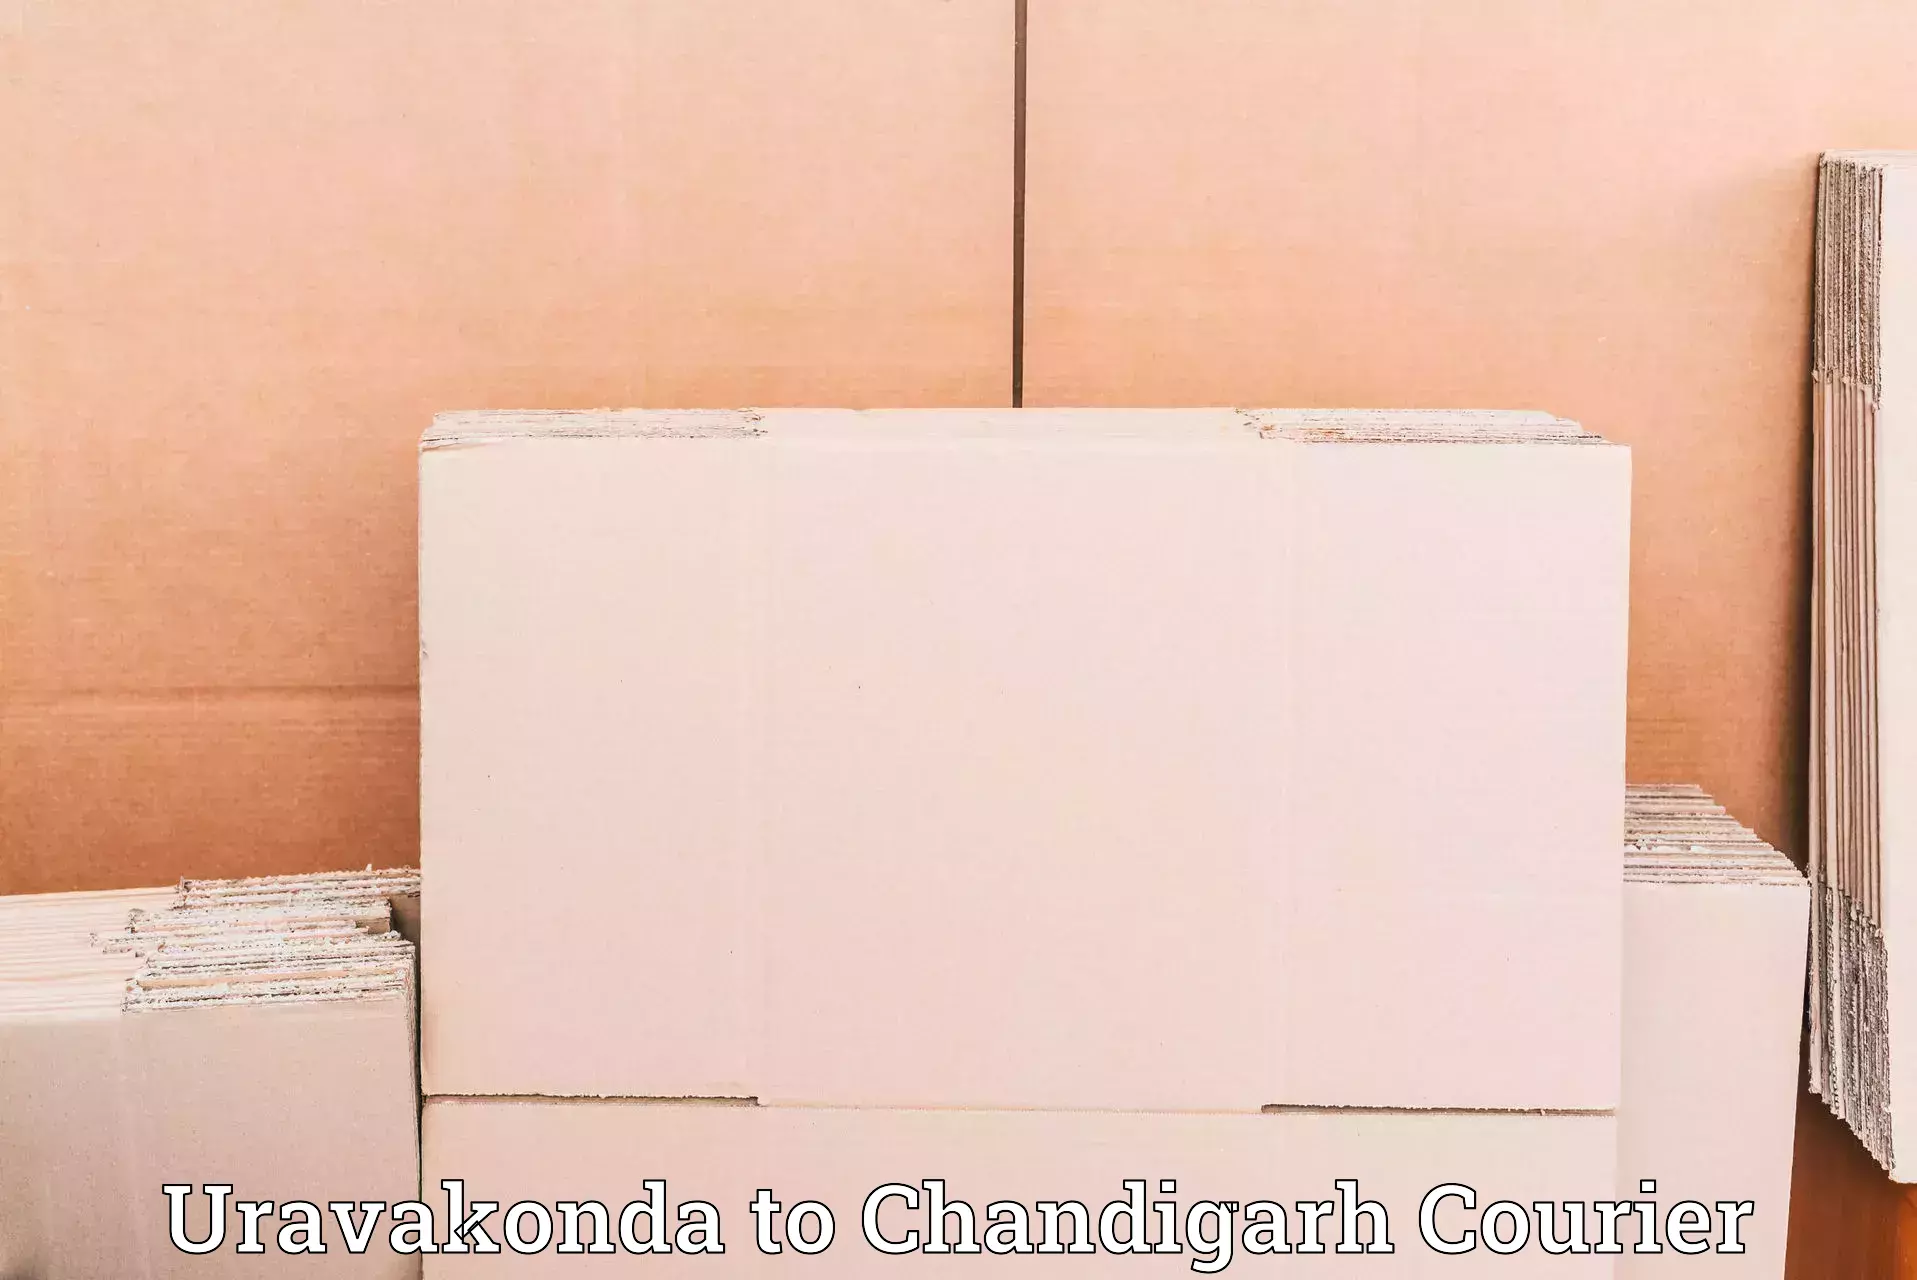 Package delivery network Uravakonda to Chandigarh